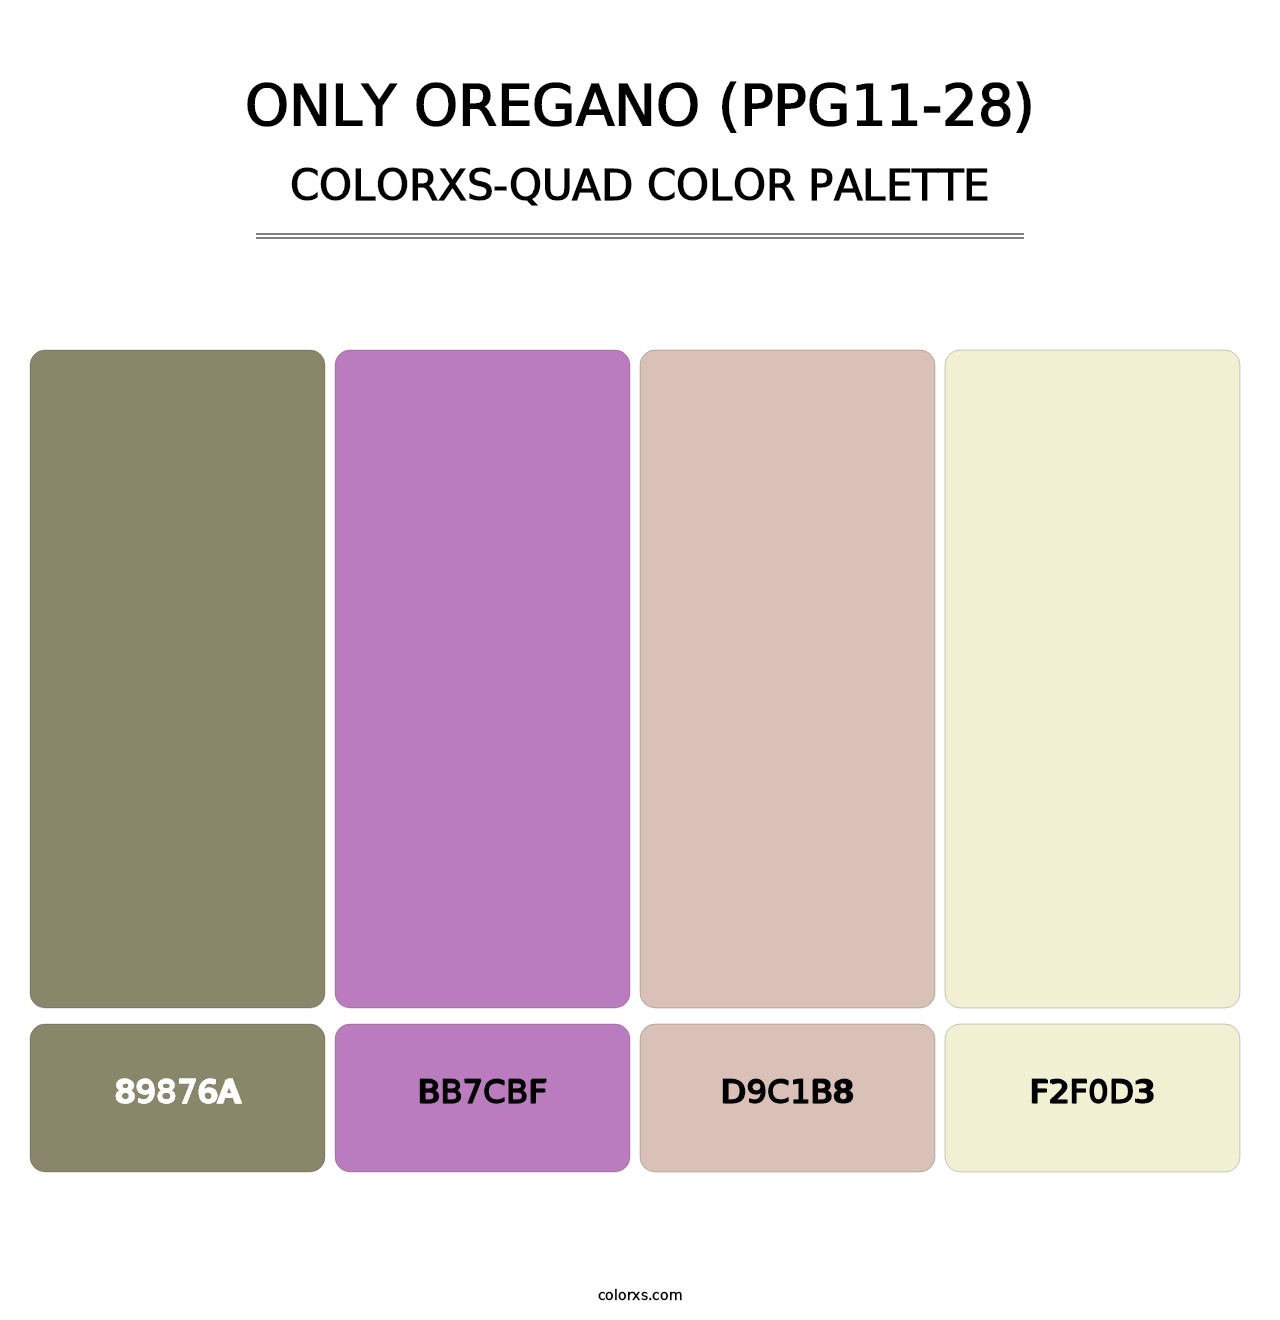 Only Oregano (PPG11-28) - Colorxs Quad Palette